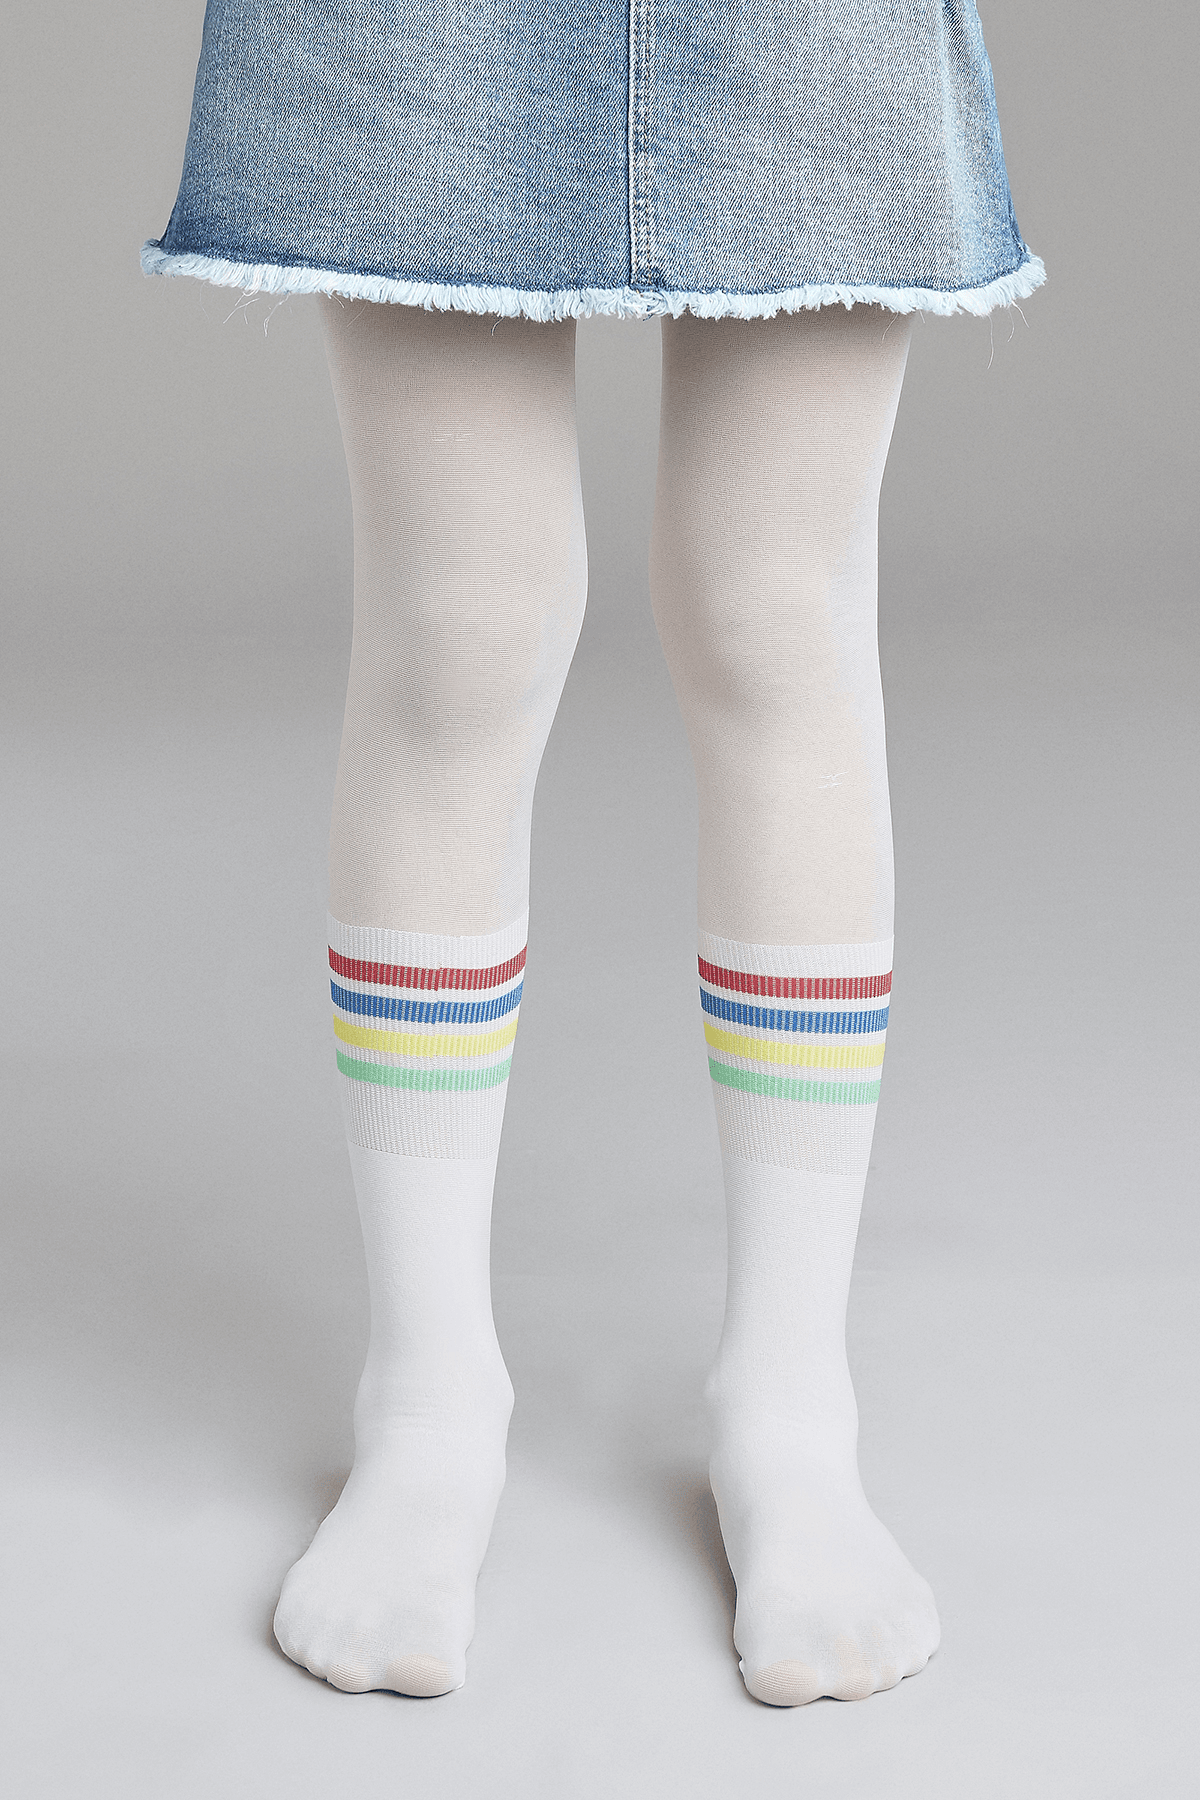 Selected image for Penti Ženske hulahopke Rainbow Stripe White